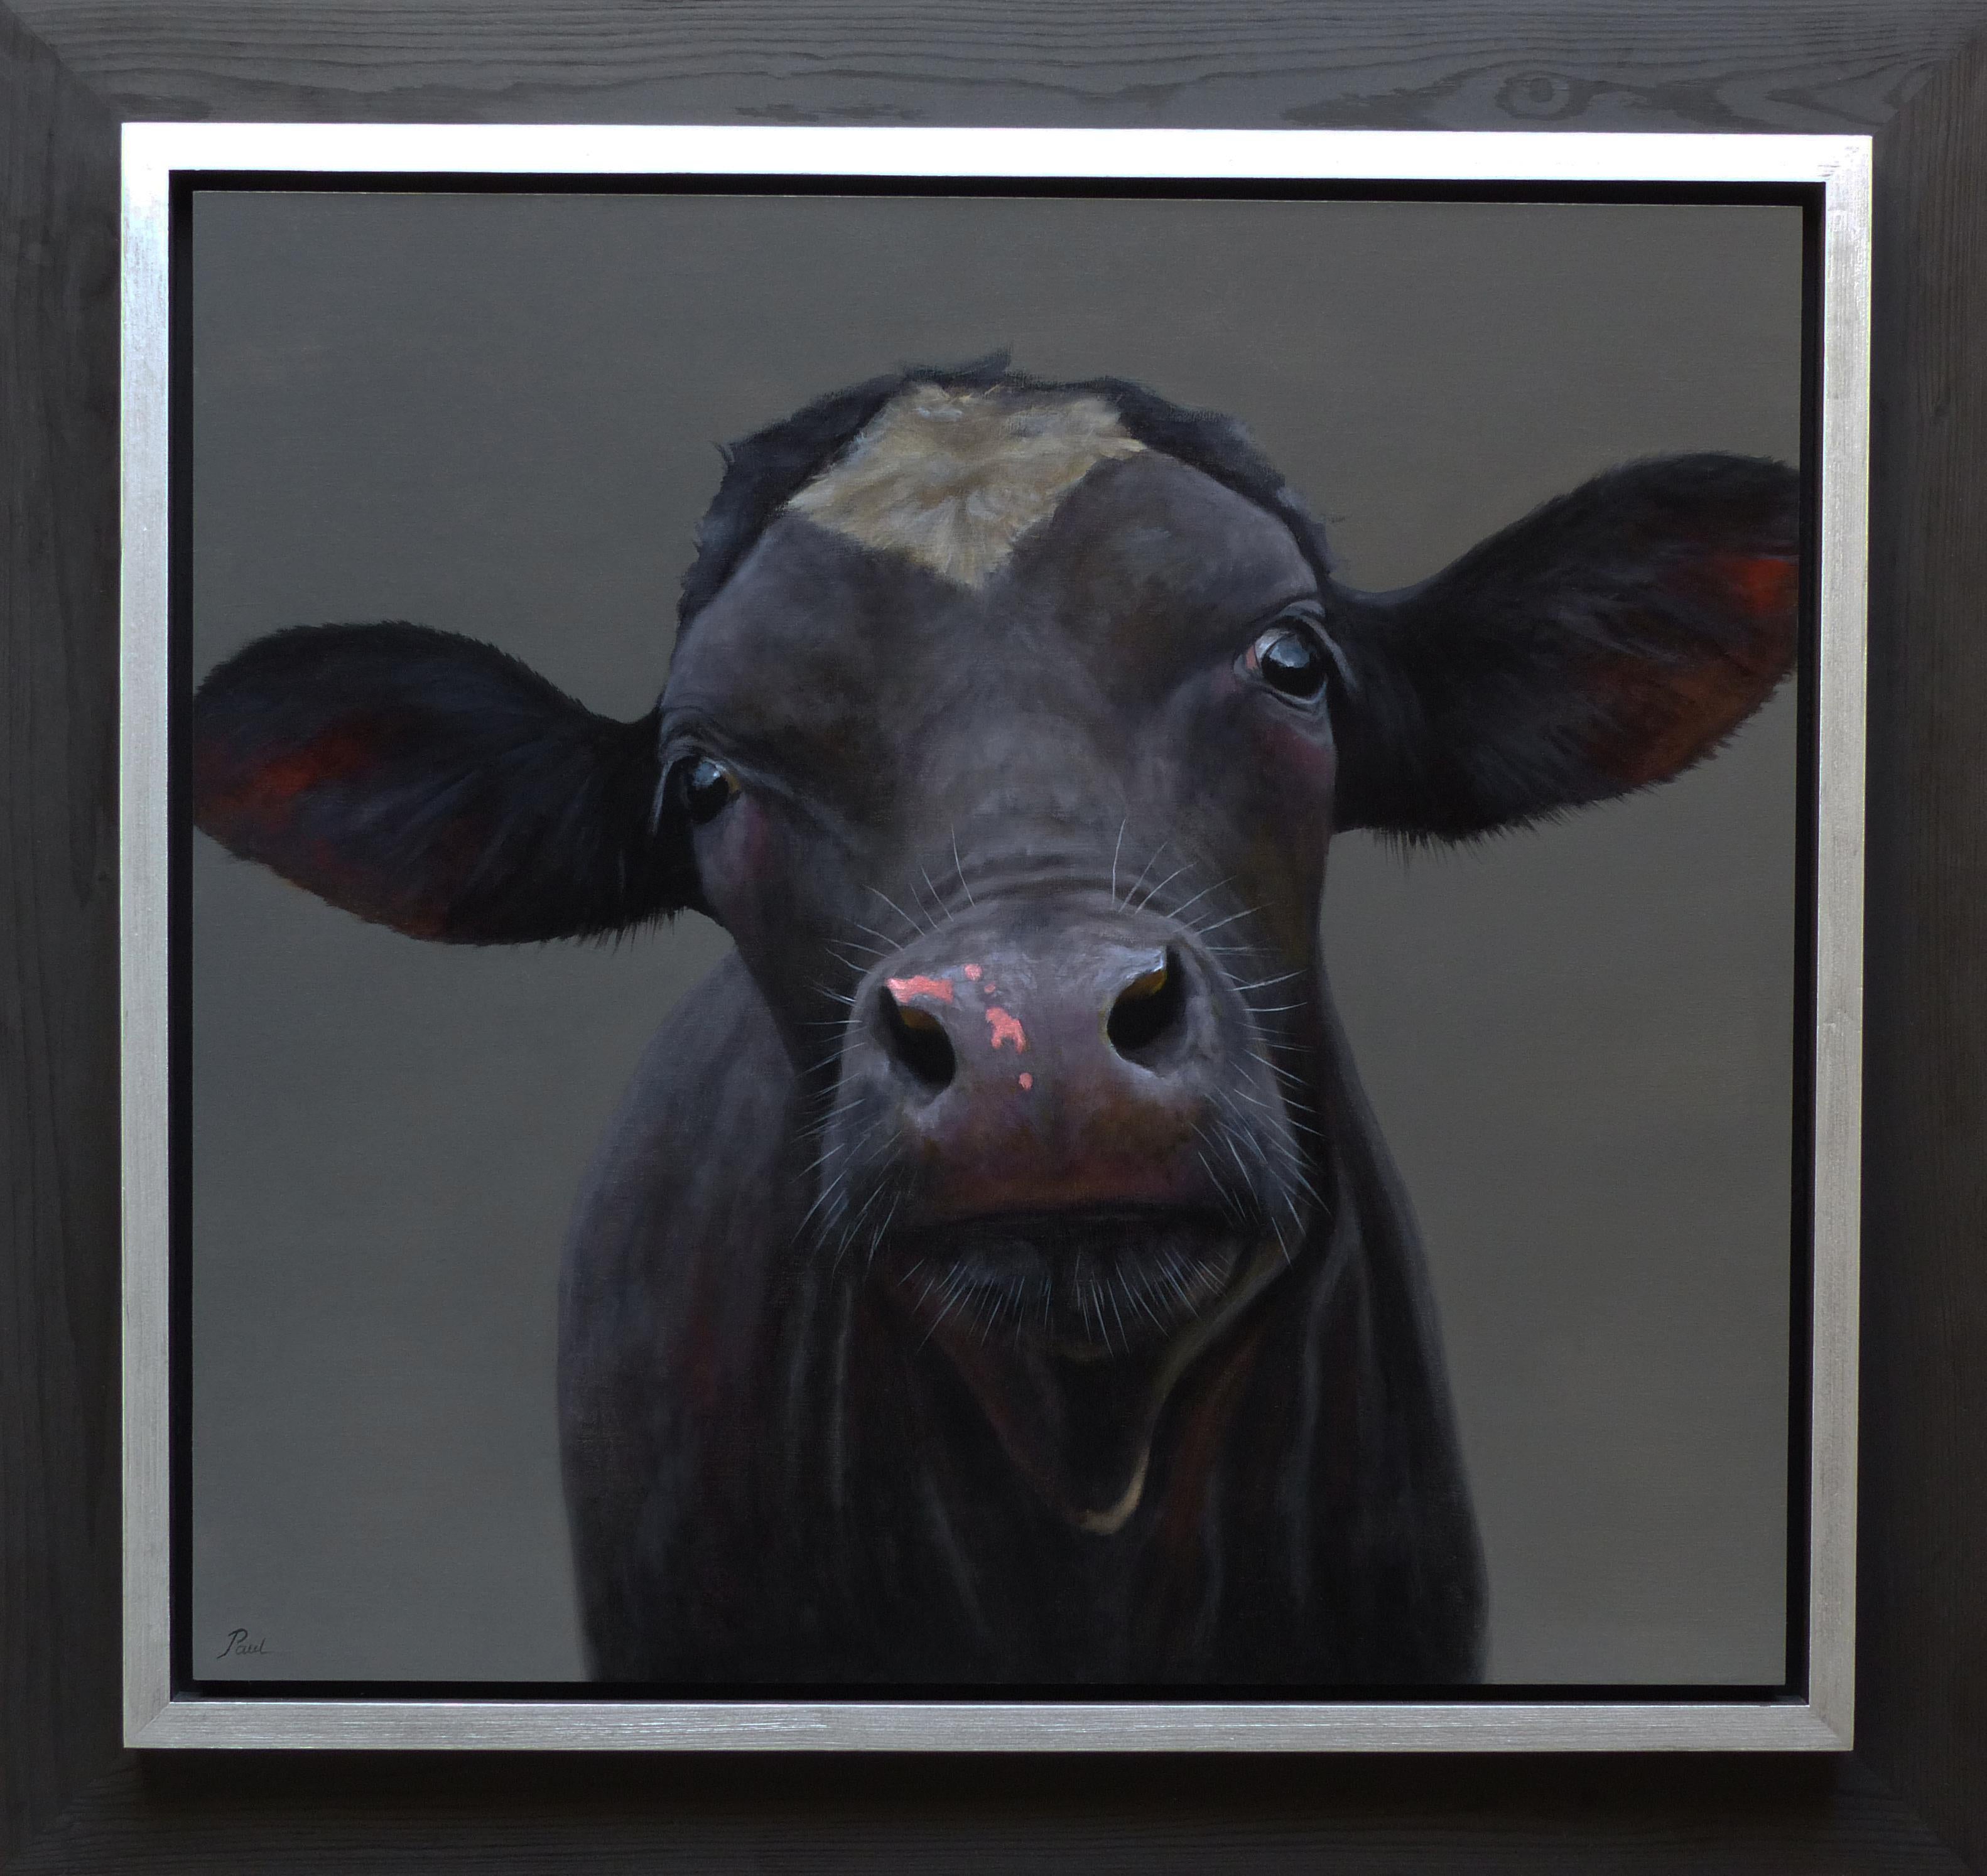 Paul Jansen Animal Painting - "Black Calf" Contemporary Dutch Oil Painting of a Black Calf, Cow Portrait